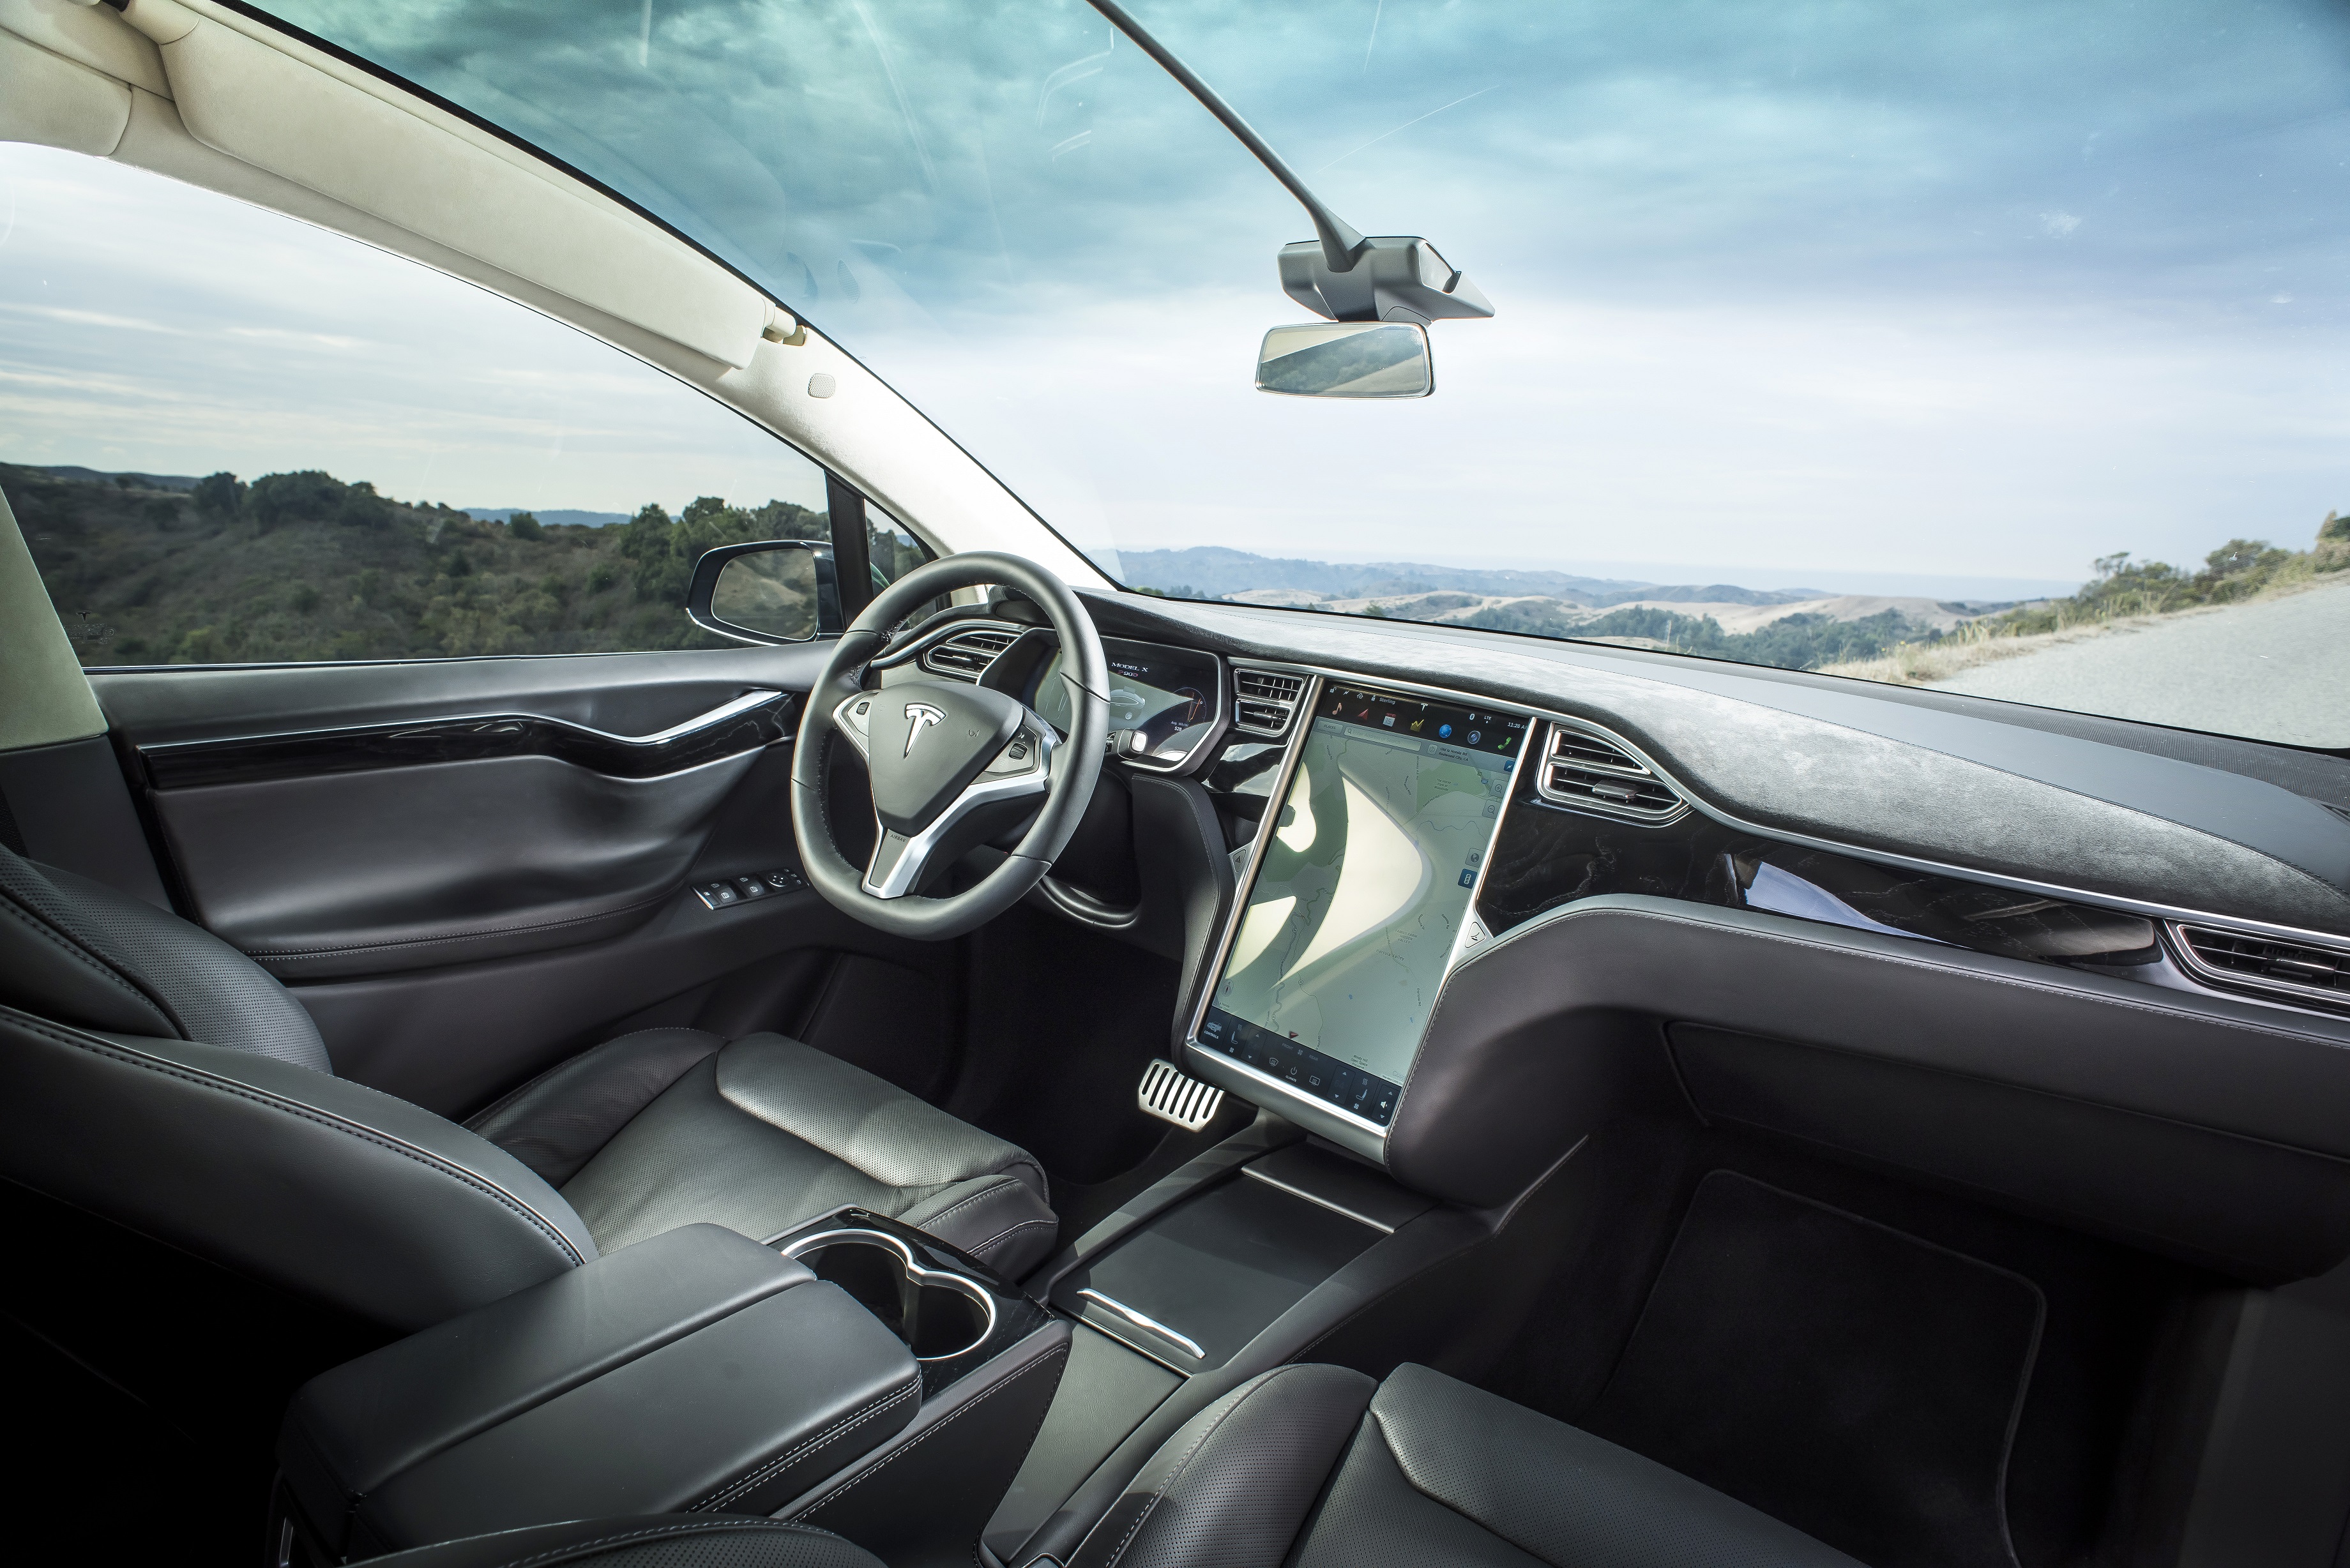 Tesla virker ikke videre begeistret over førere som ignorerer bilens advarsler.